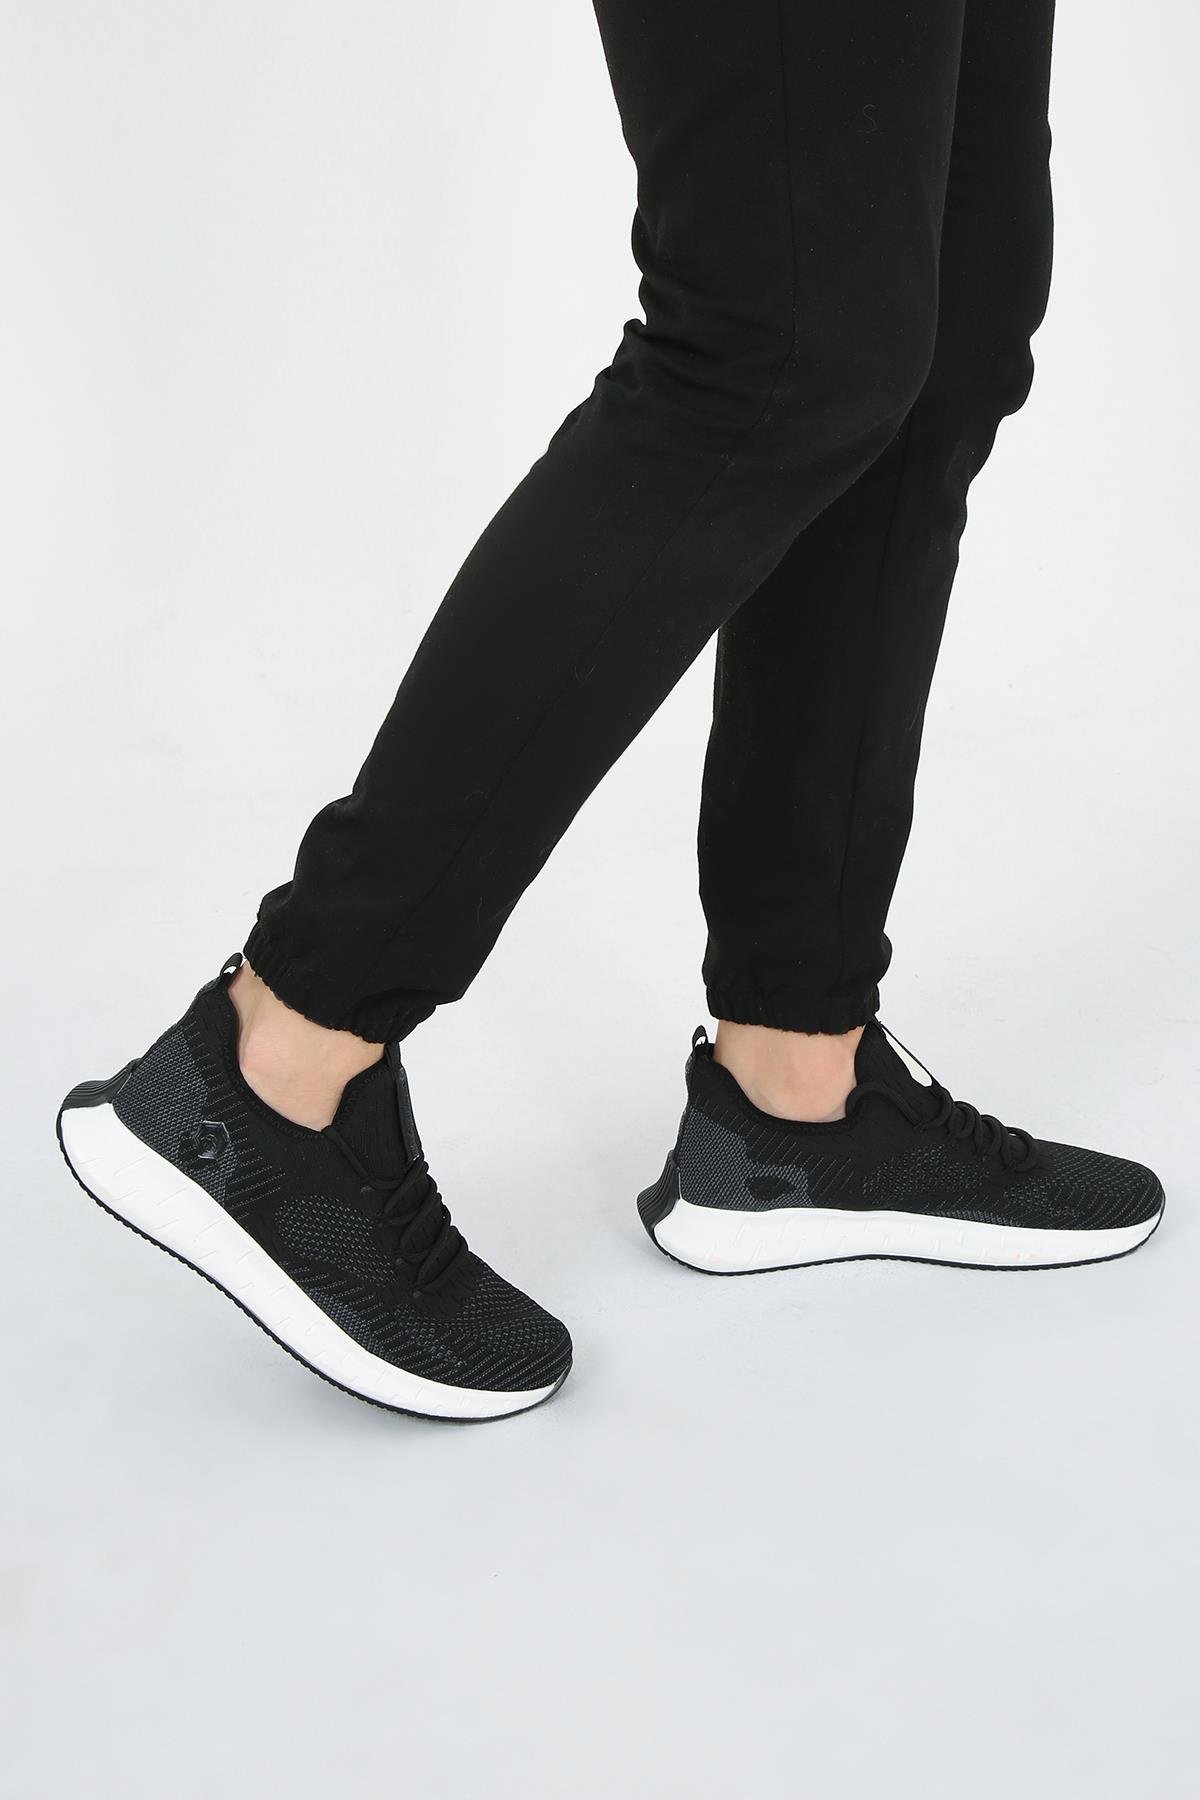 Cassidoshoes Siyah Çelik Örme Rahat Taban Erkek Spor Ayakkabı I Cassido  Shoes